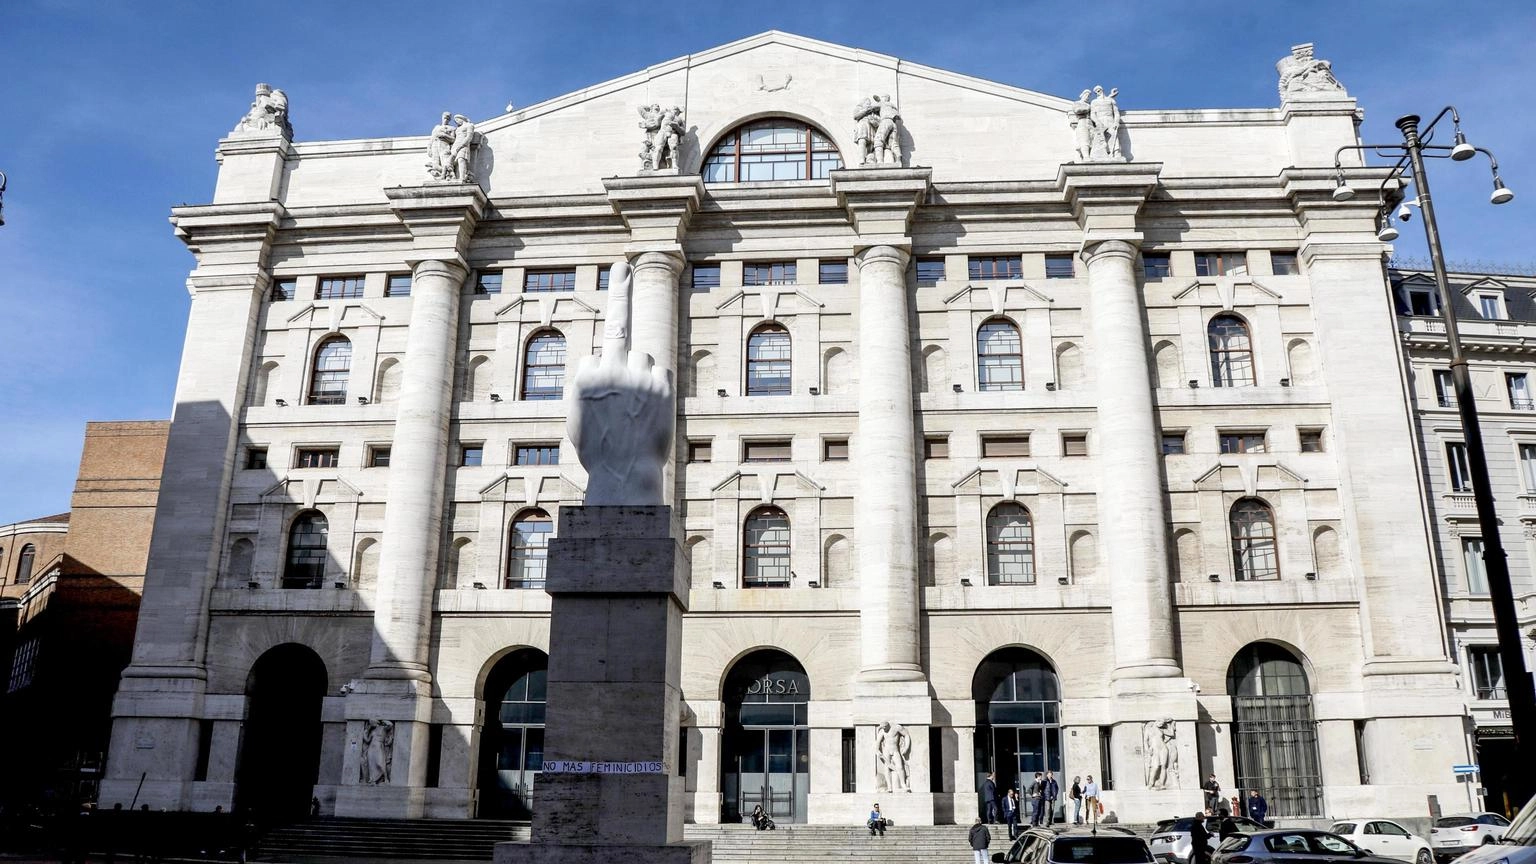 Borsa: Milano cede (-0,4%), giù Enel, Italgas ed Erg, corre Mps